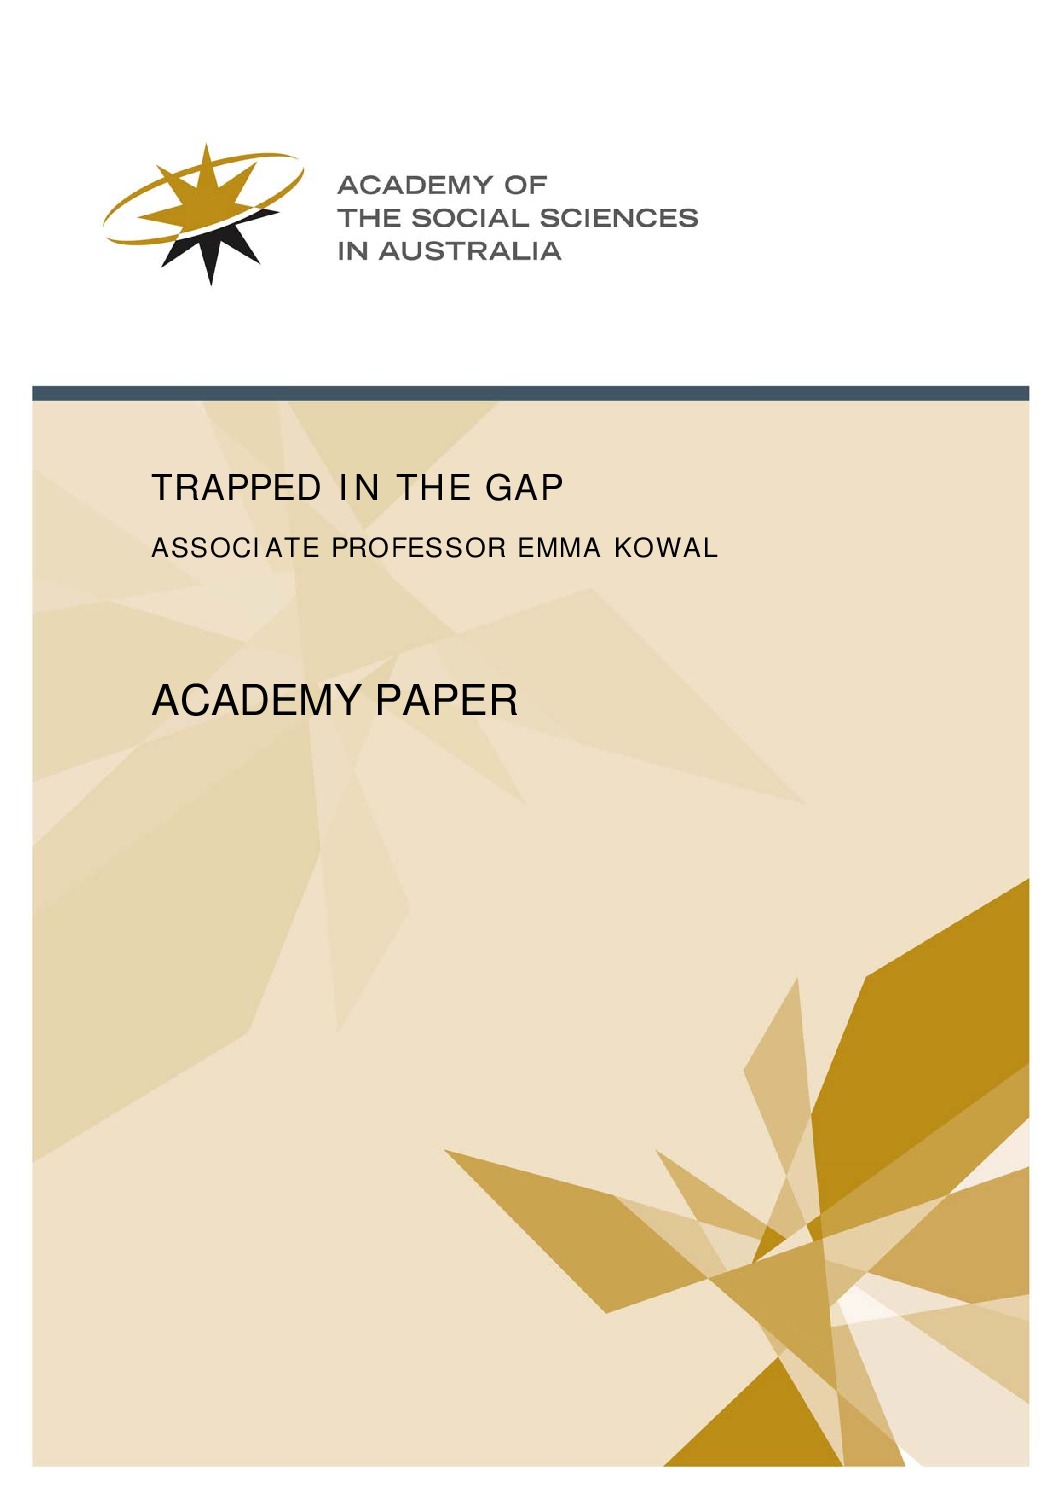 Academy Paper 5 2016 Paul Bourke Lecture 2015 1 pdf 1